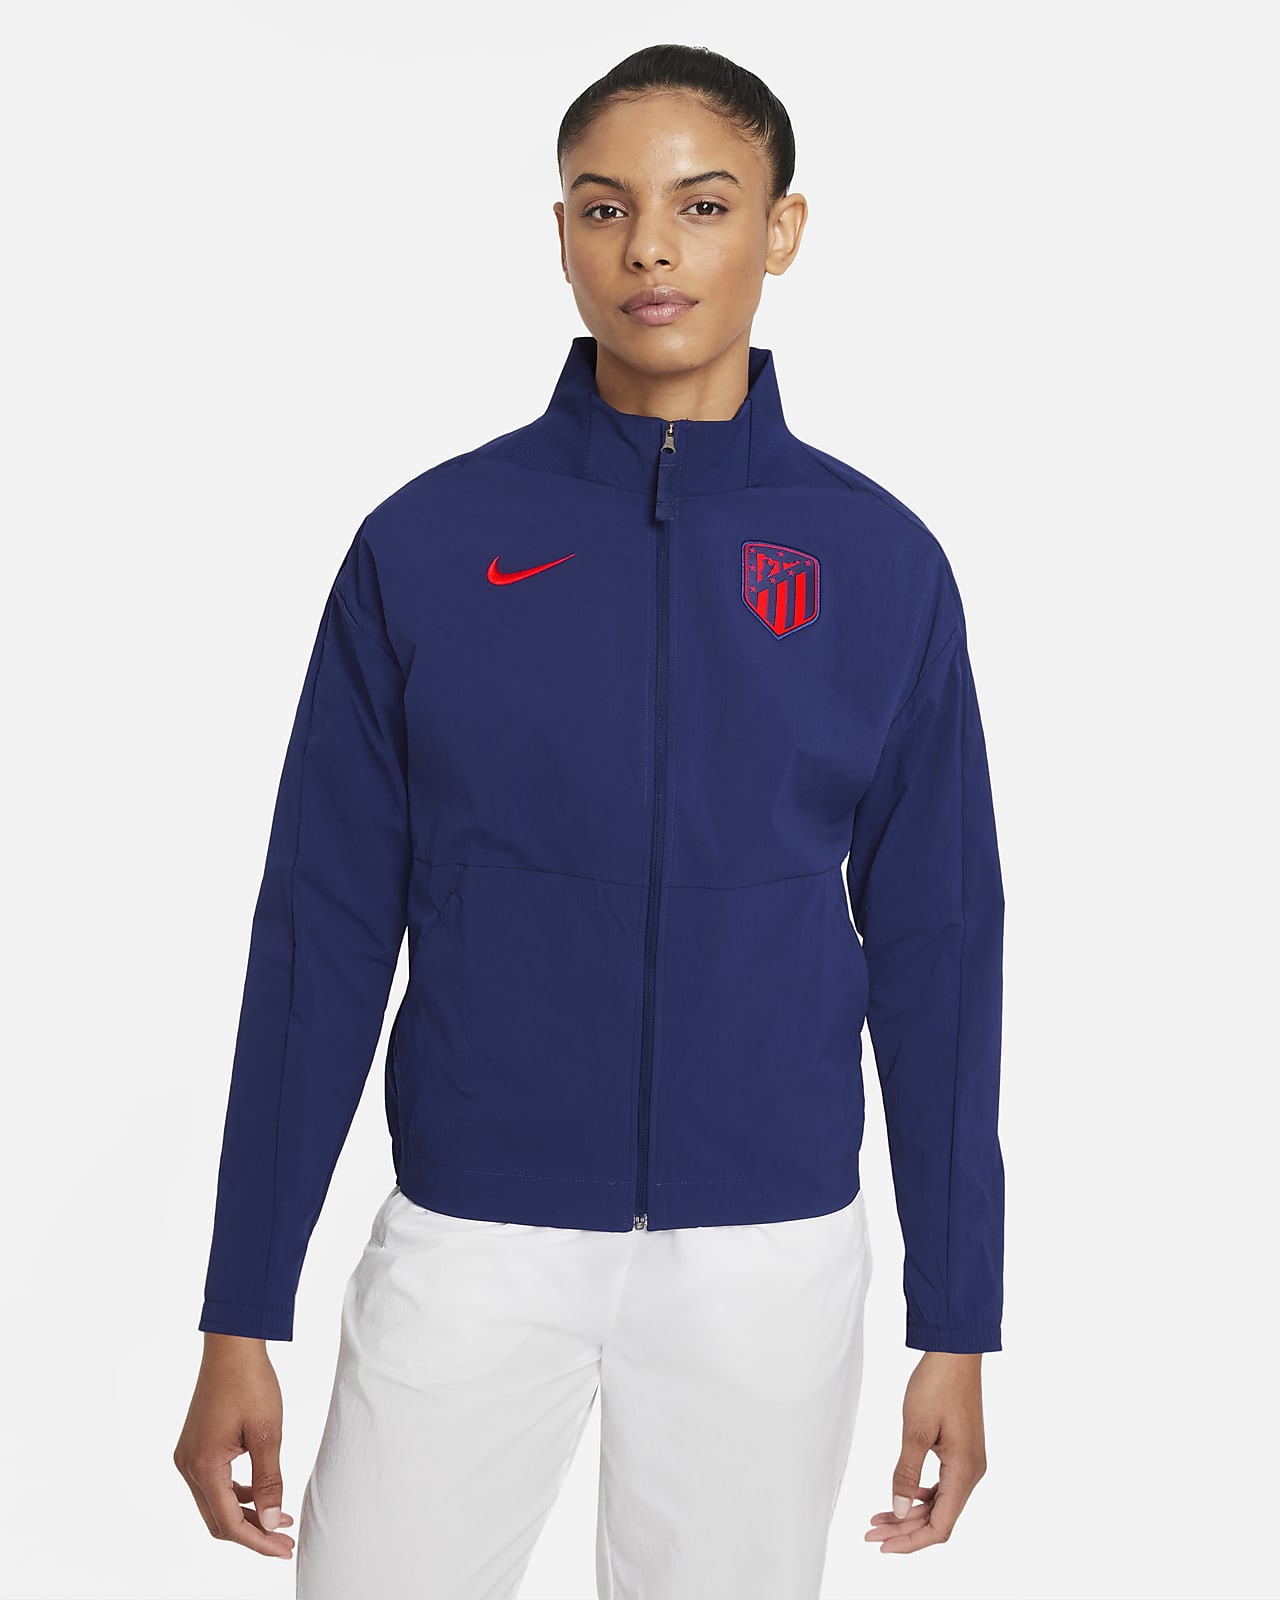 Atlético Madrid Women's Football Jacket